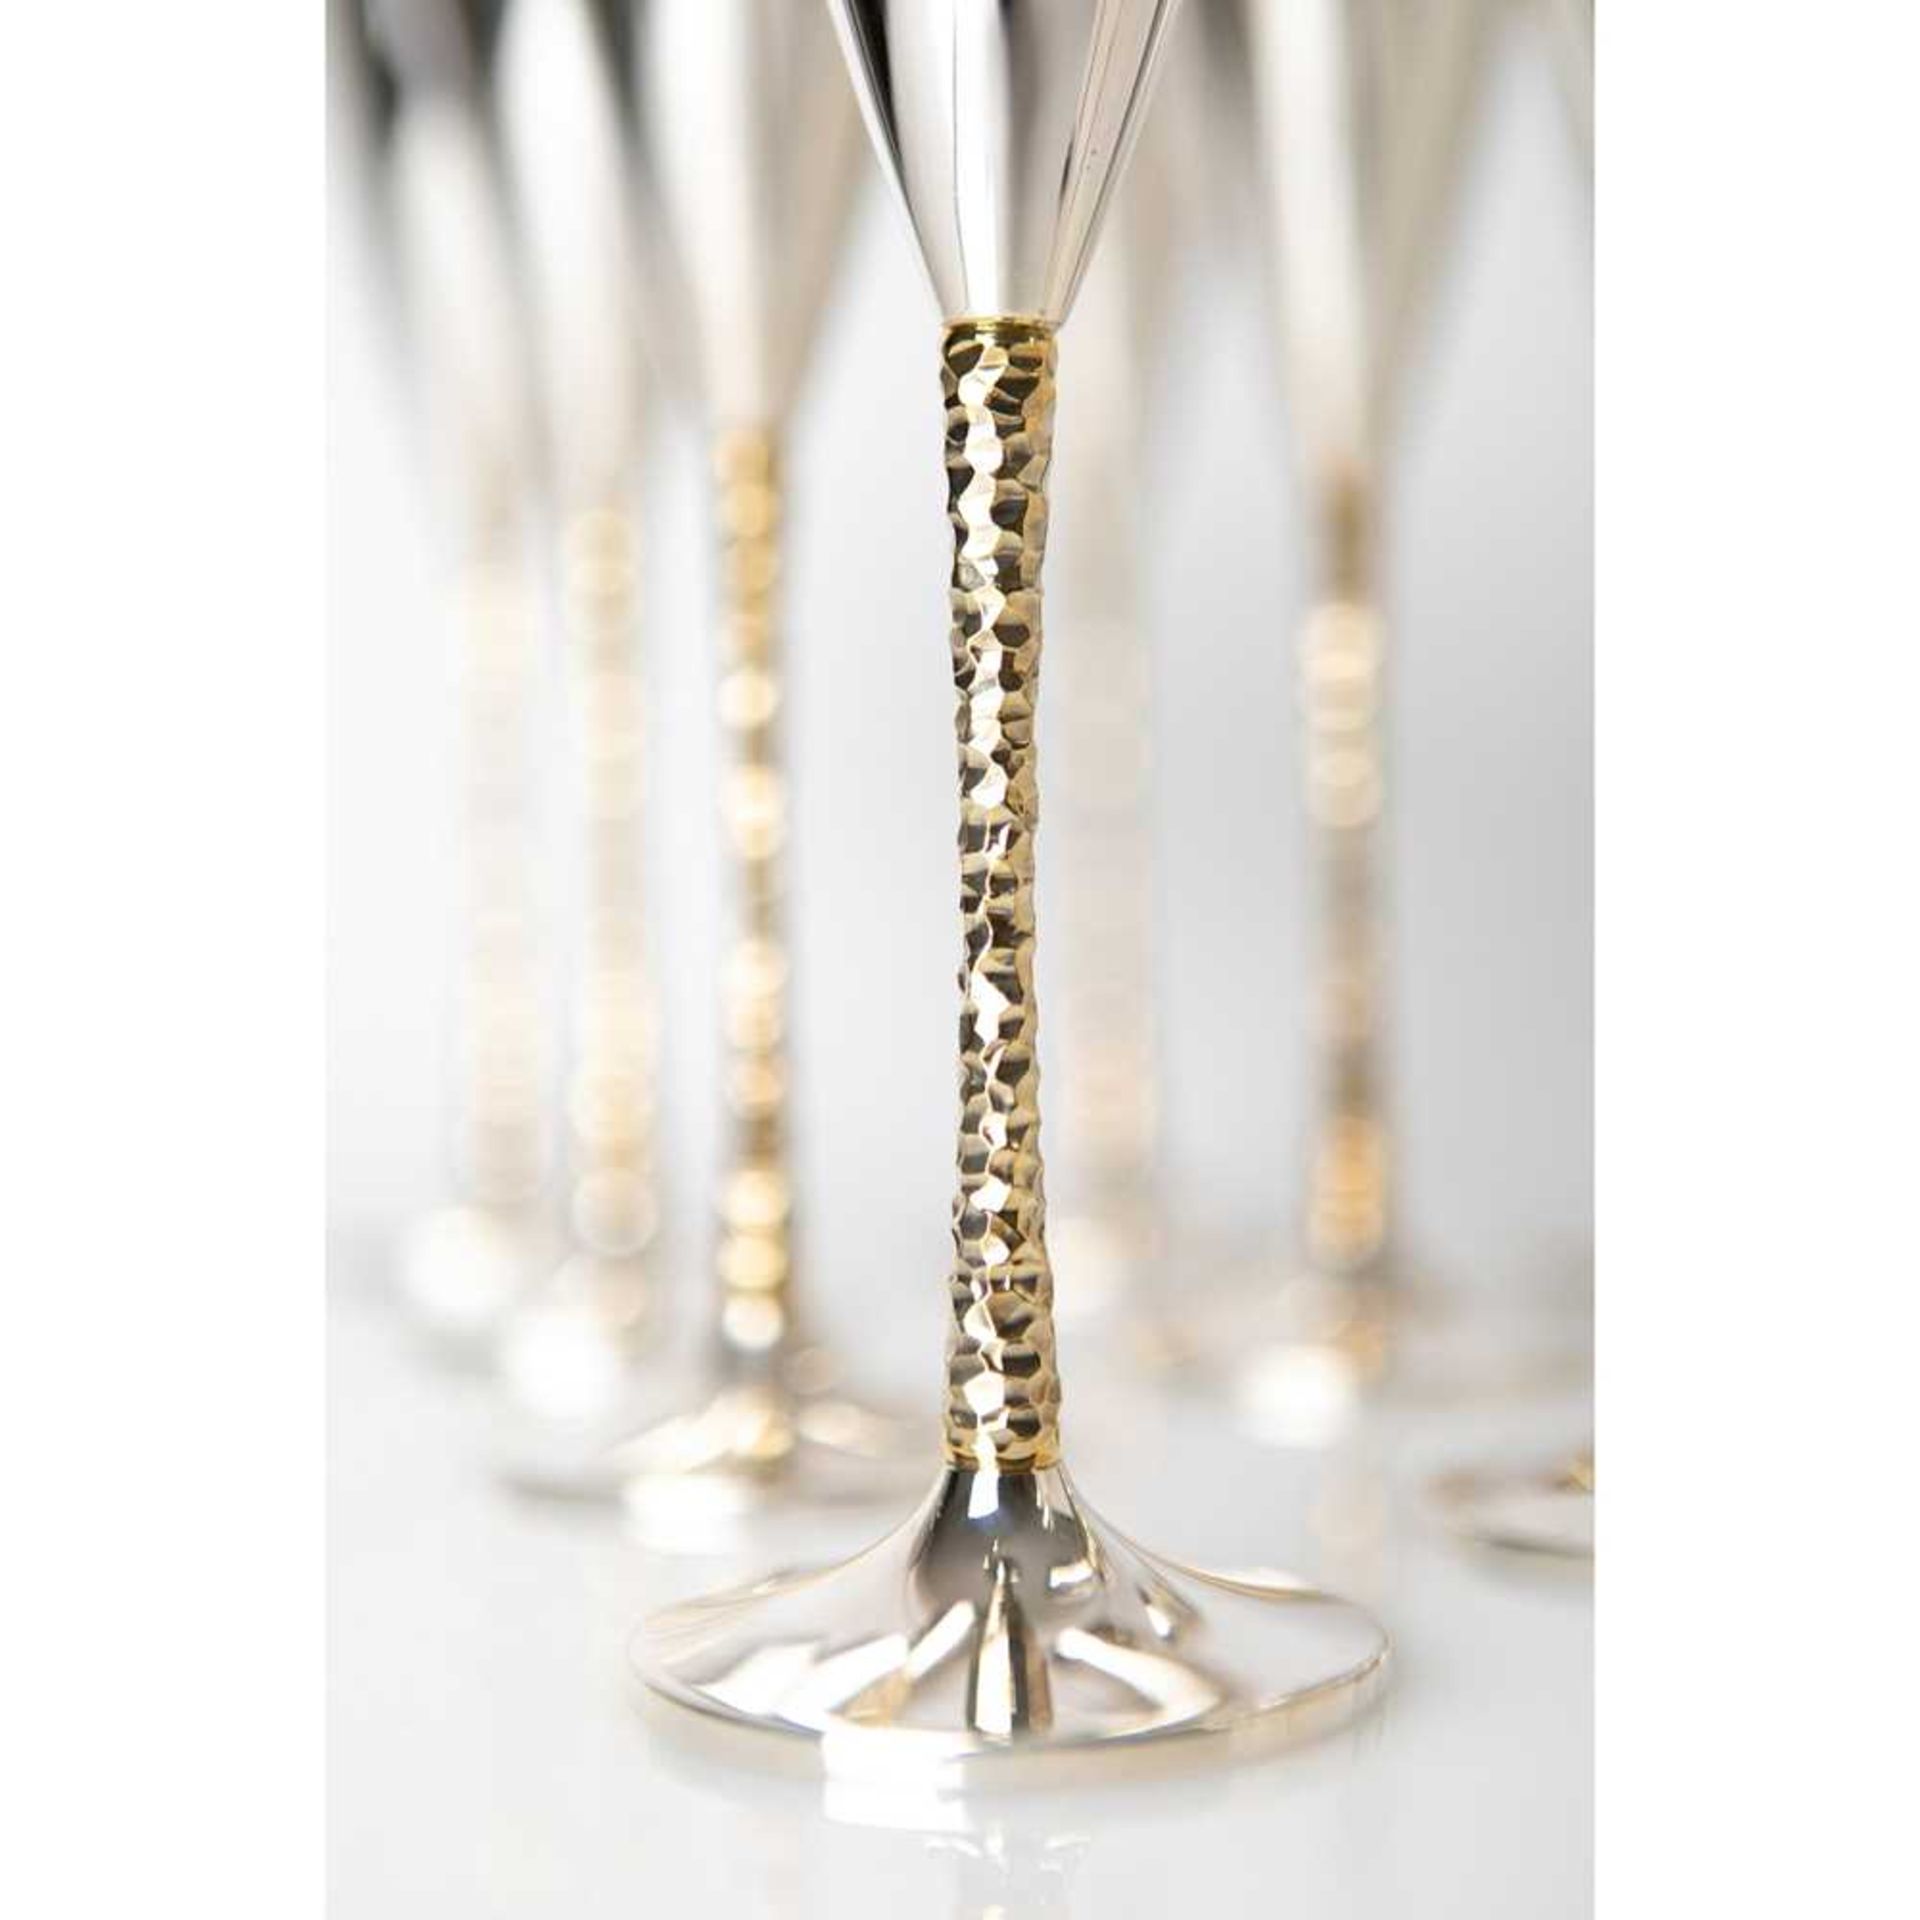 Stuart Devlin A.O. C.M.G. (Australian/British 1931-2018) Set of 12 Champagne Flutes, London 1977-198 - Image 2 of 2